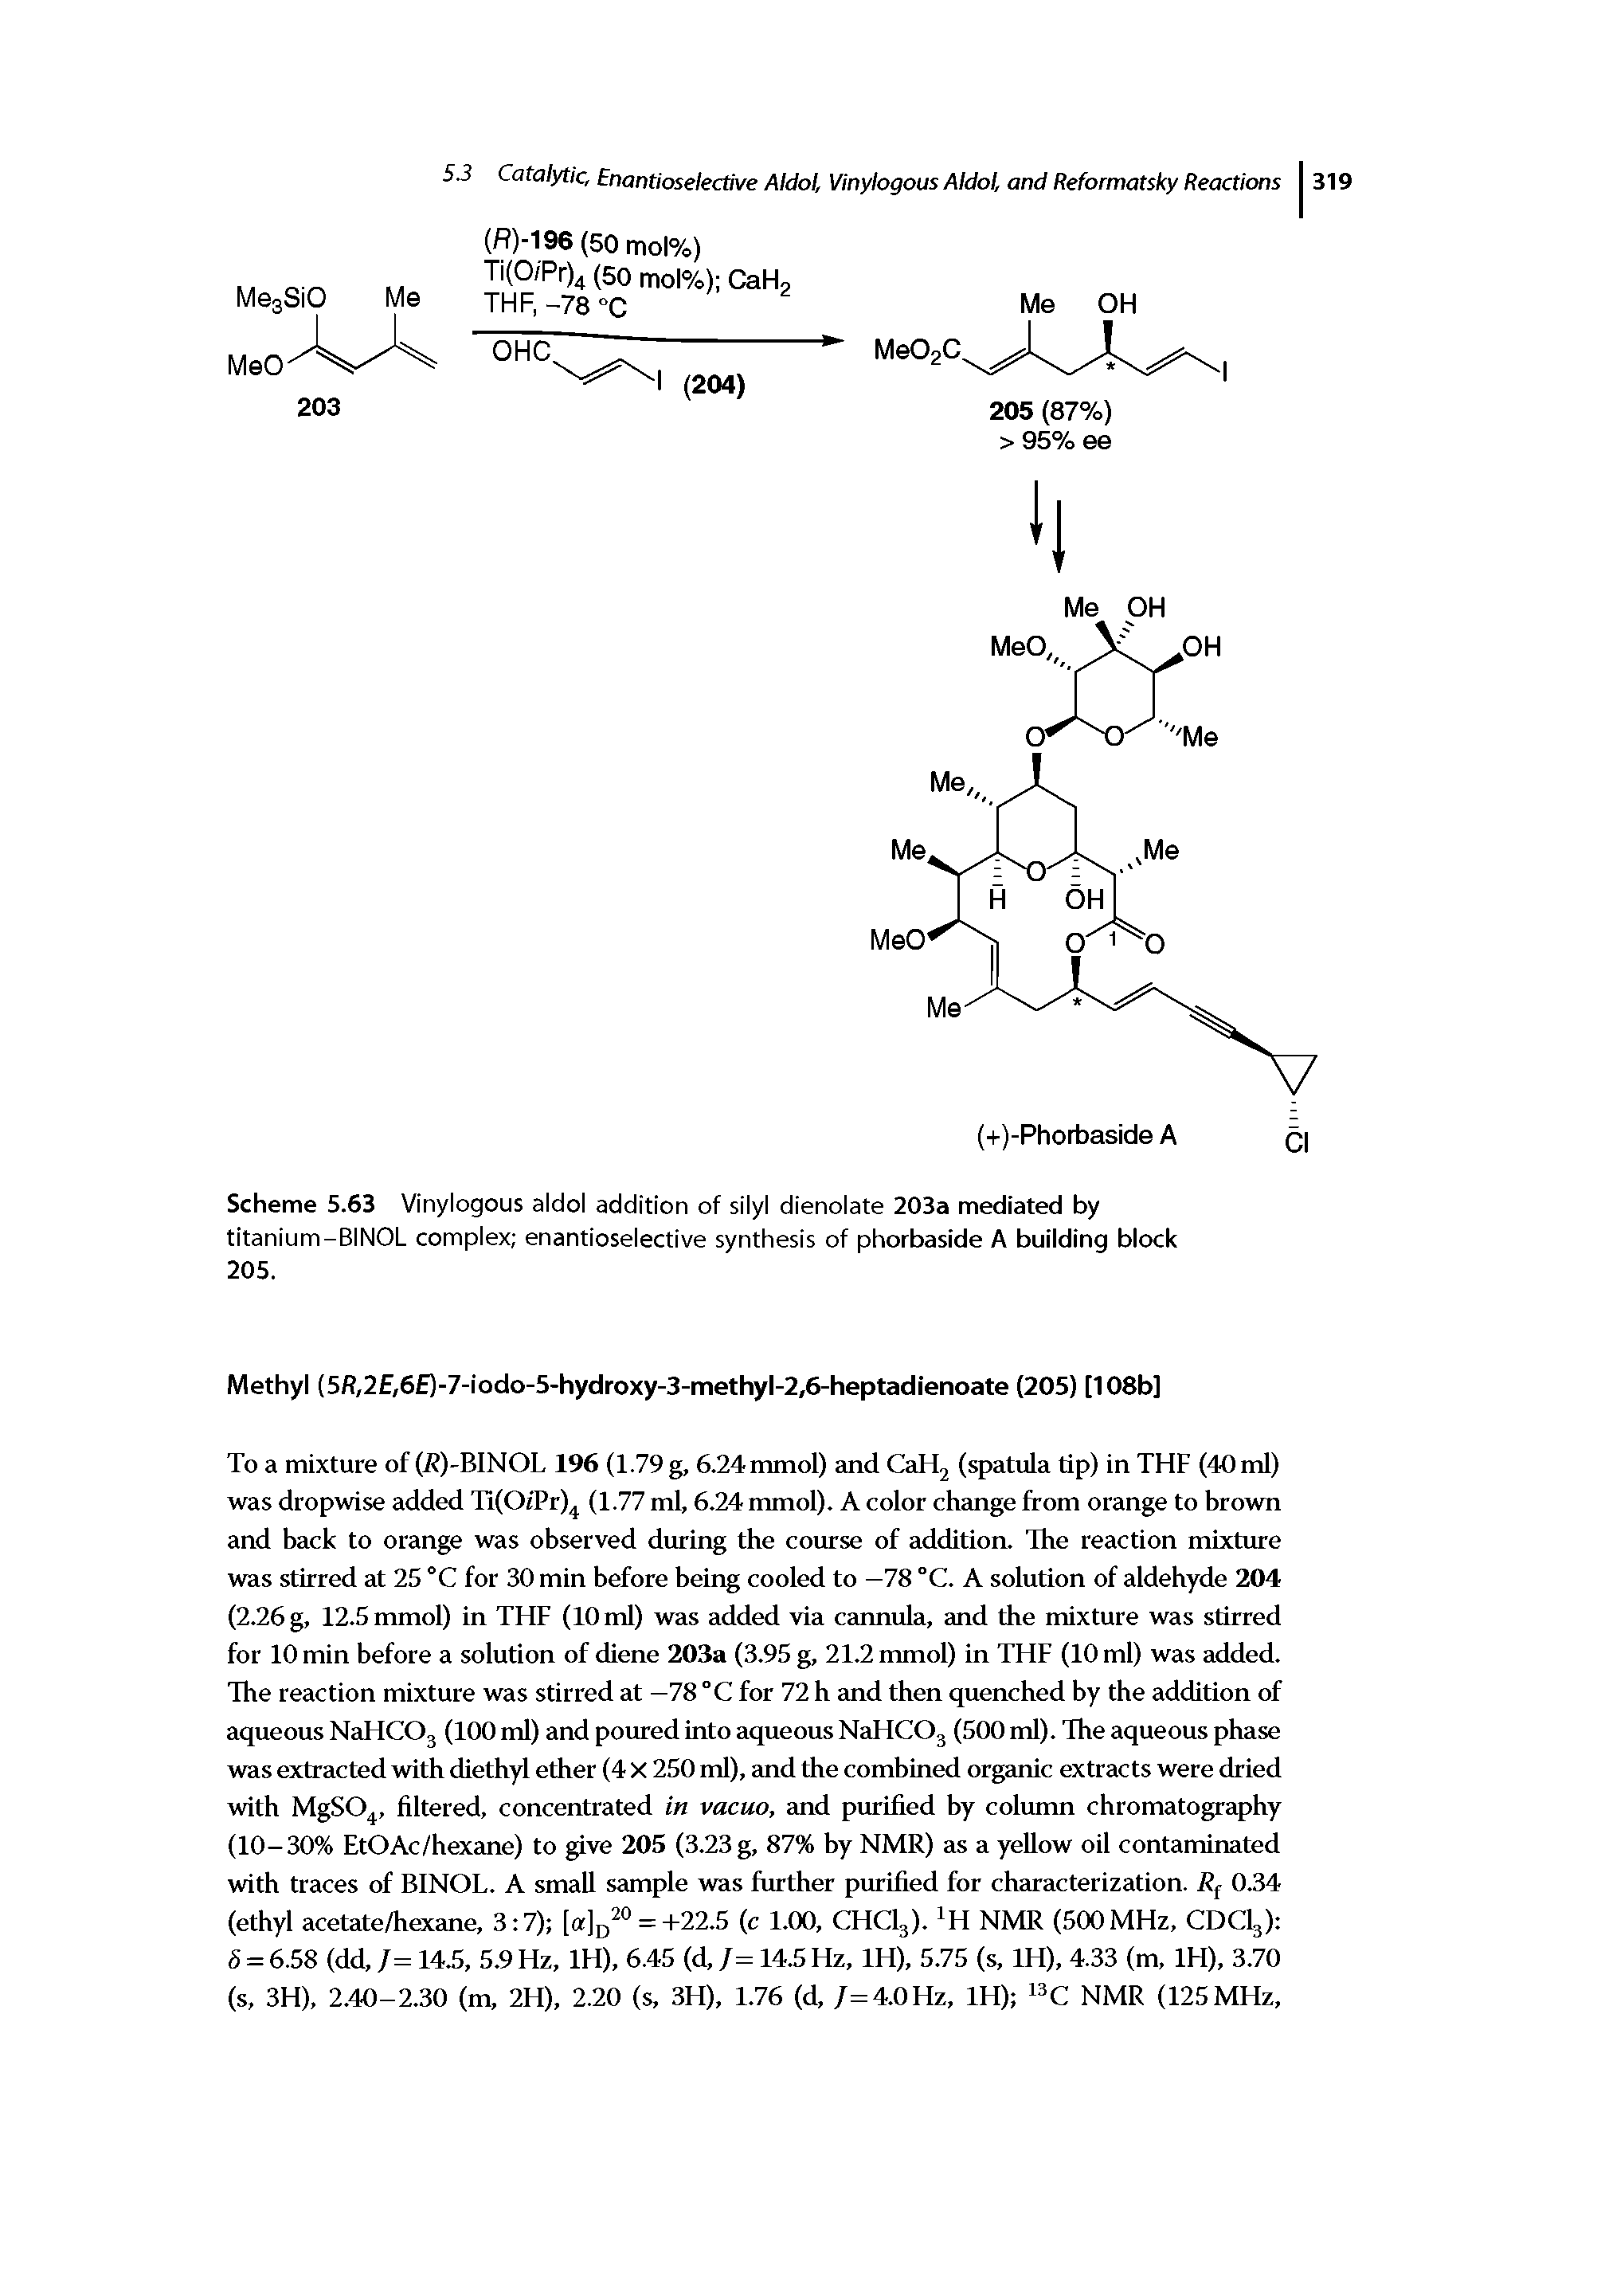 Scheme 5.63 Vinylogous aldol addition of silyl dienolate 203a mediated by titanium-BINOL complex enantioselective synthesis of phorbaside A building block 205.